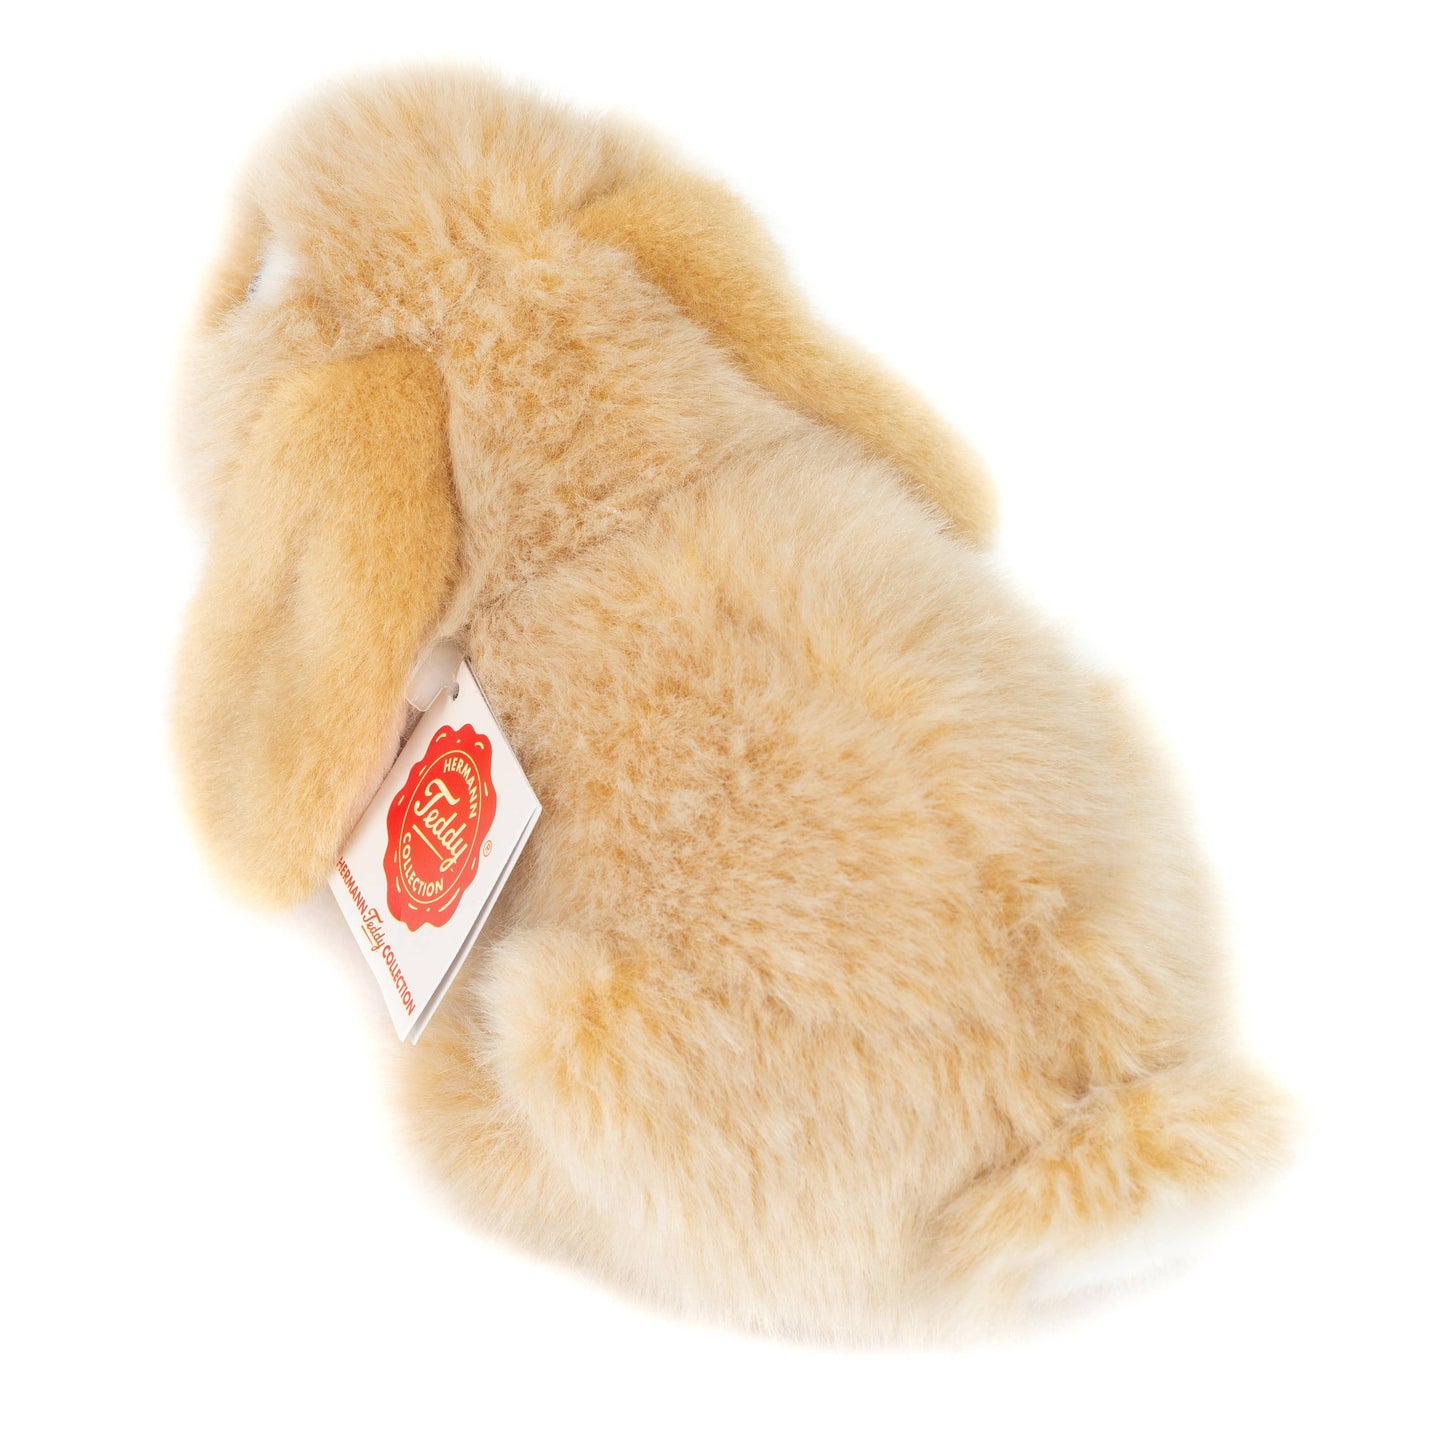 Floppy-Eared Beige Rabbit Plush